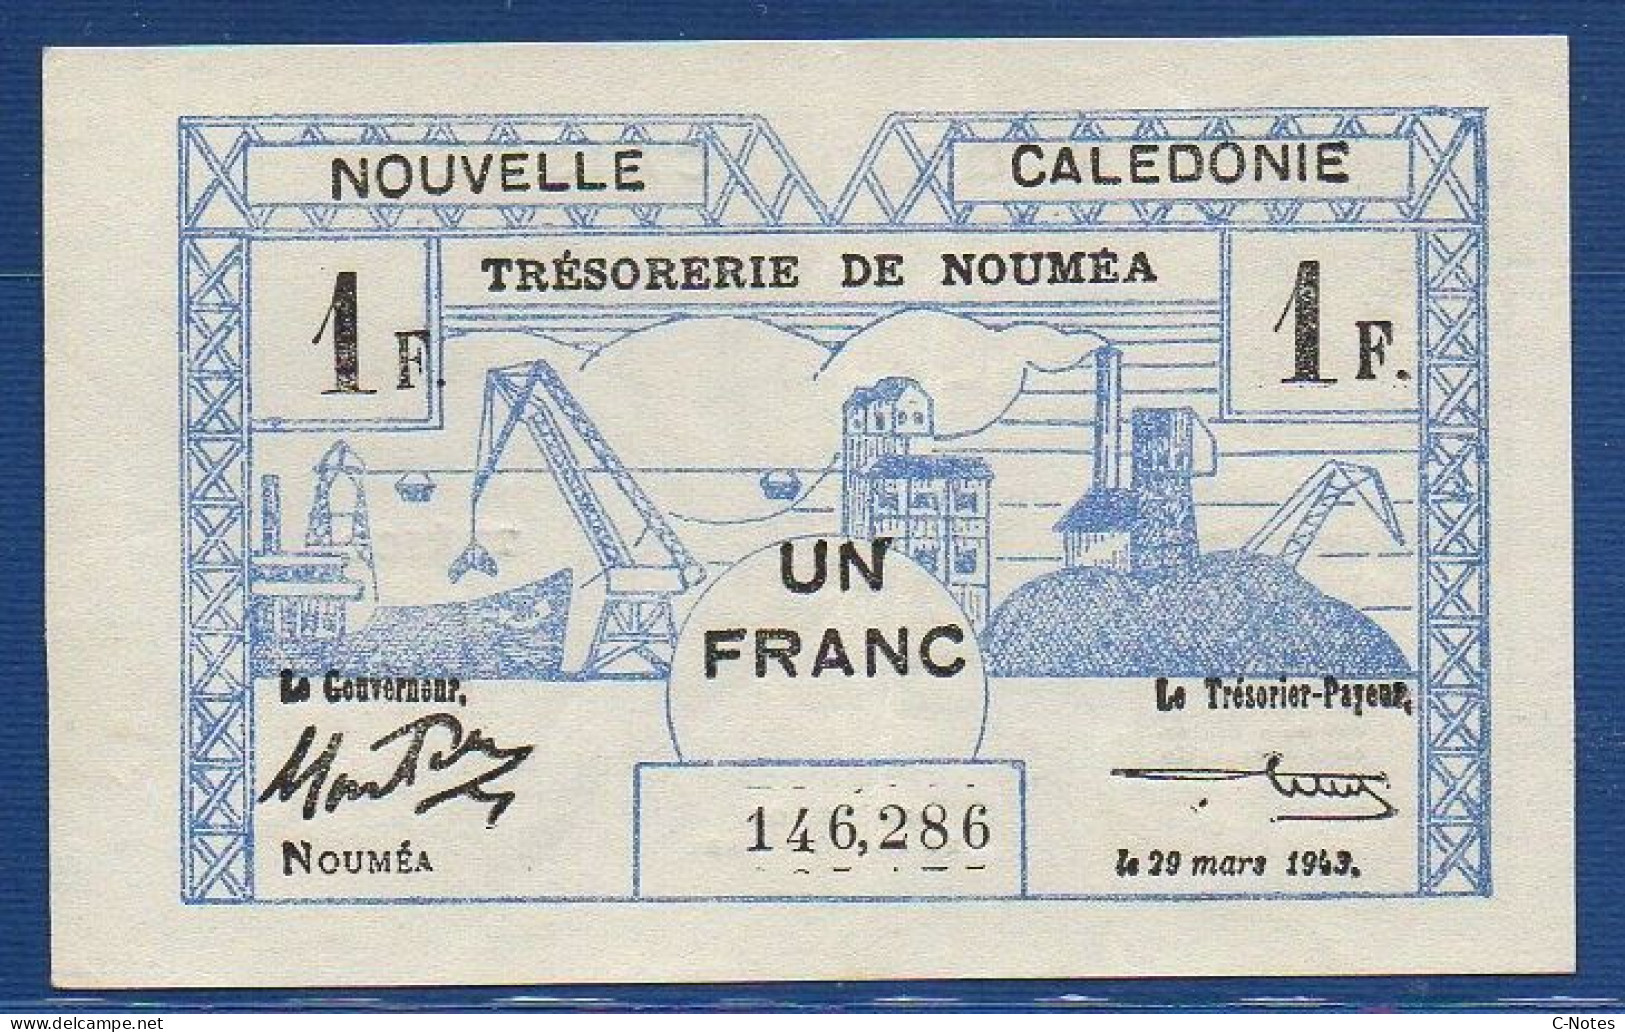 NEW CALEDONIA - Nouméa  - P.55a – 1 Franc 1943 XF/AU, S/n 146,286 - Nouméa (New Caledonia 1873-1985)